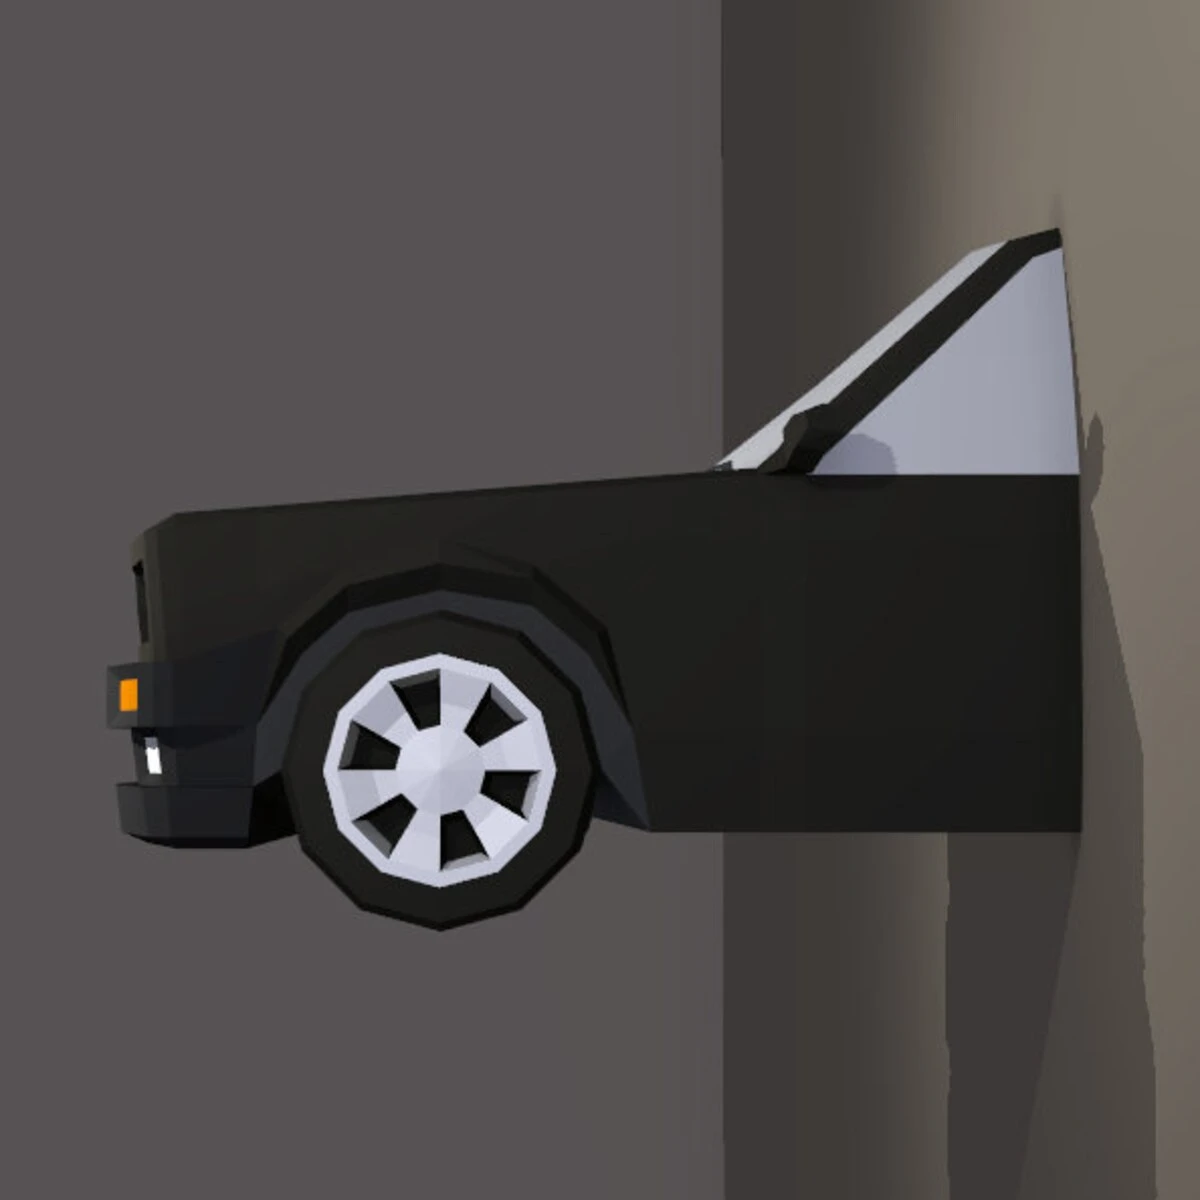 BMW E30 Papercraft Car, Auto Papercraft, PDF templates, Paper art, 3D Design for Crafts, Do it yourself, 3DIER